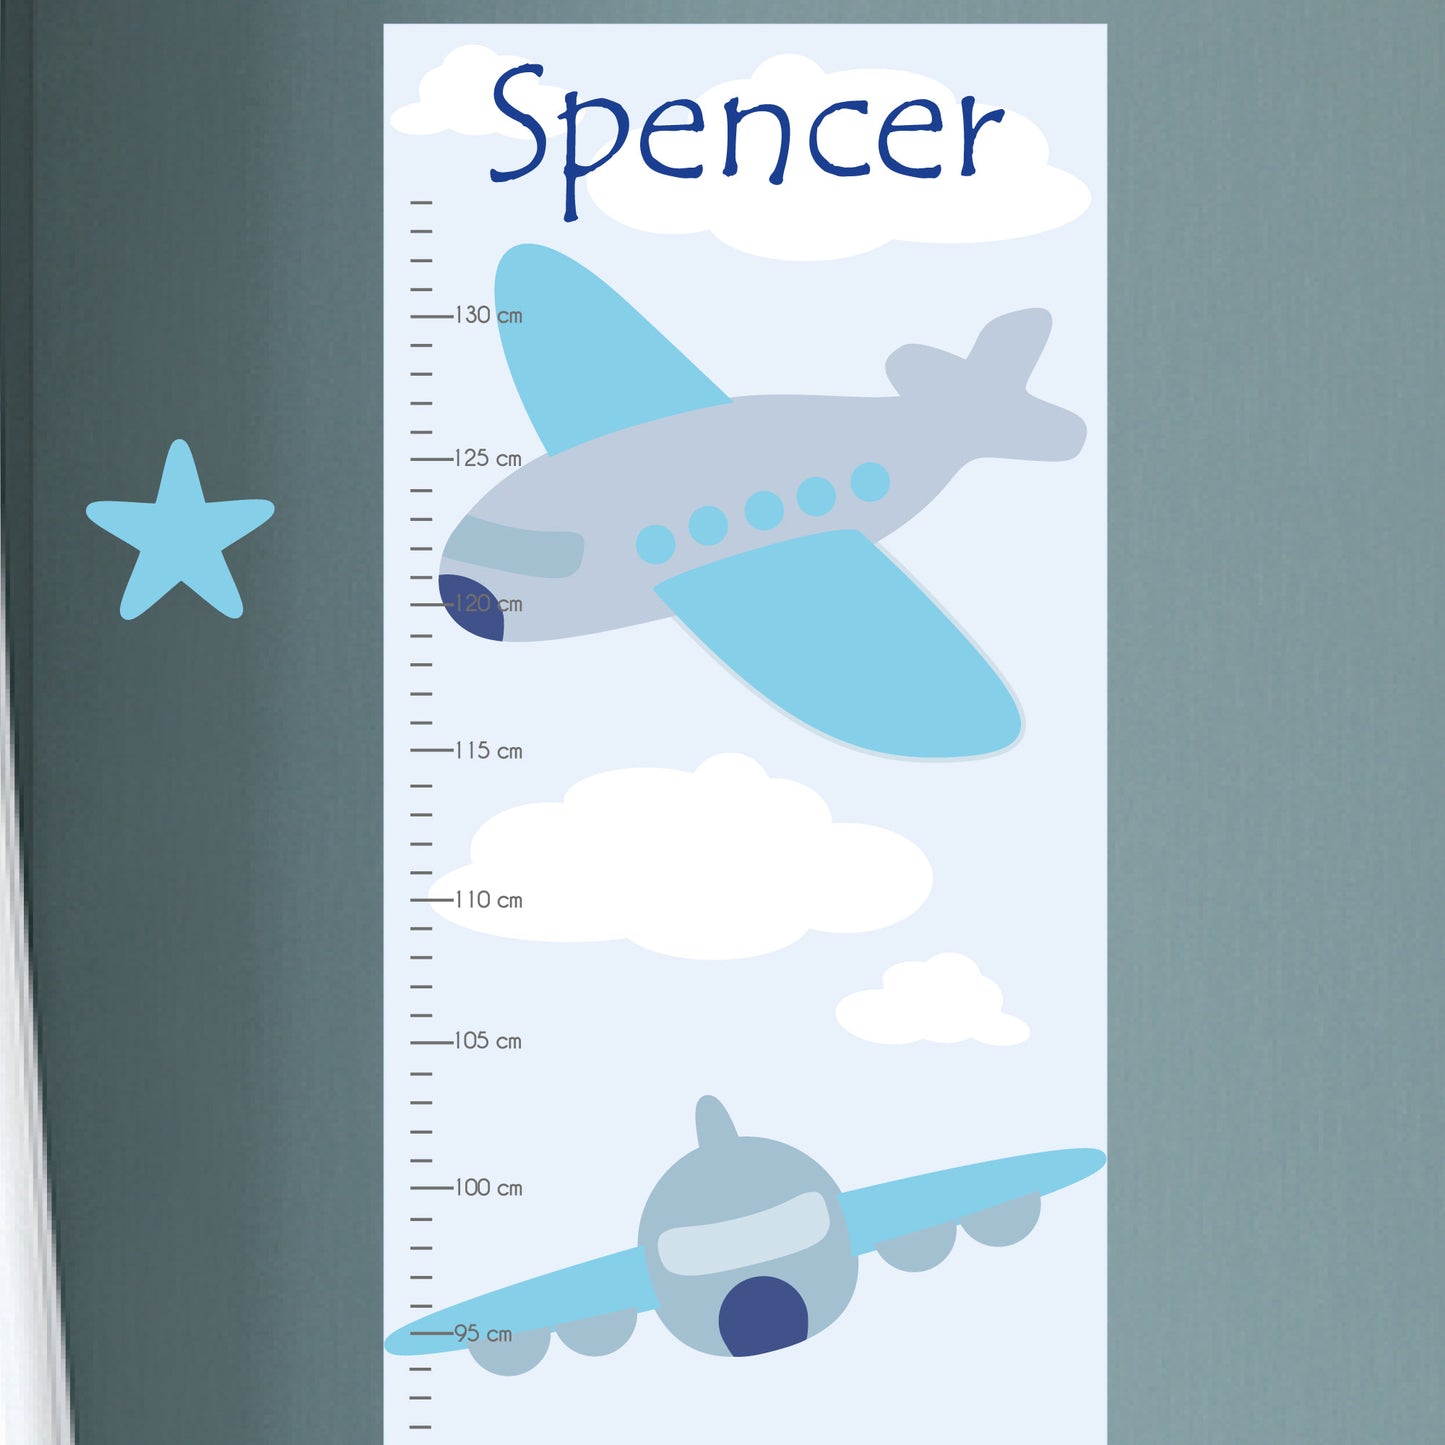 Boys Aeroplane Growth Chart Wall Sticker